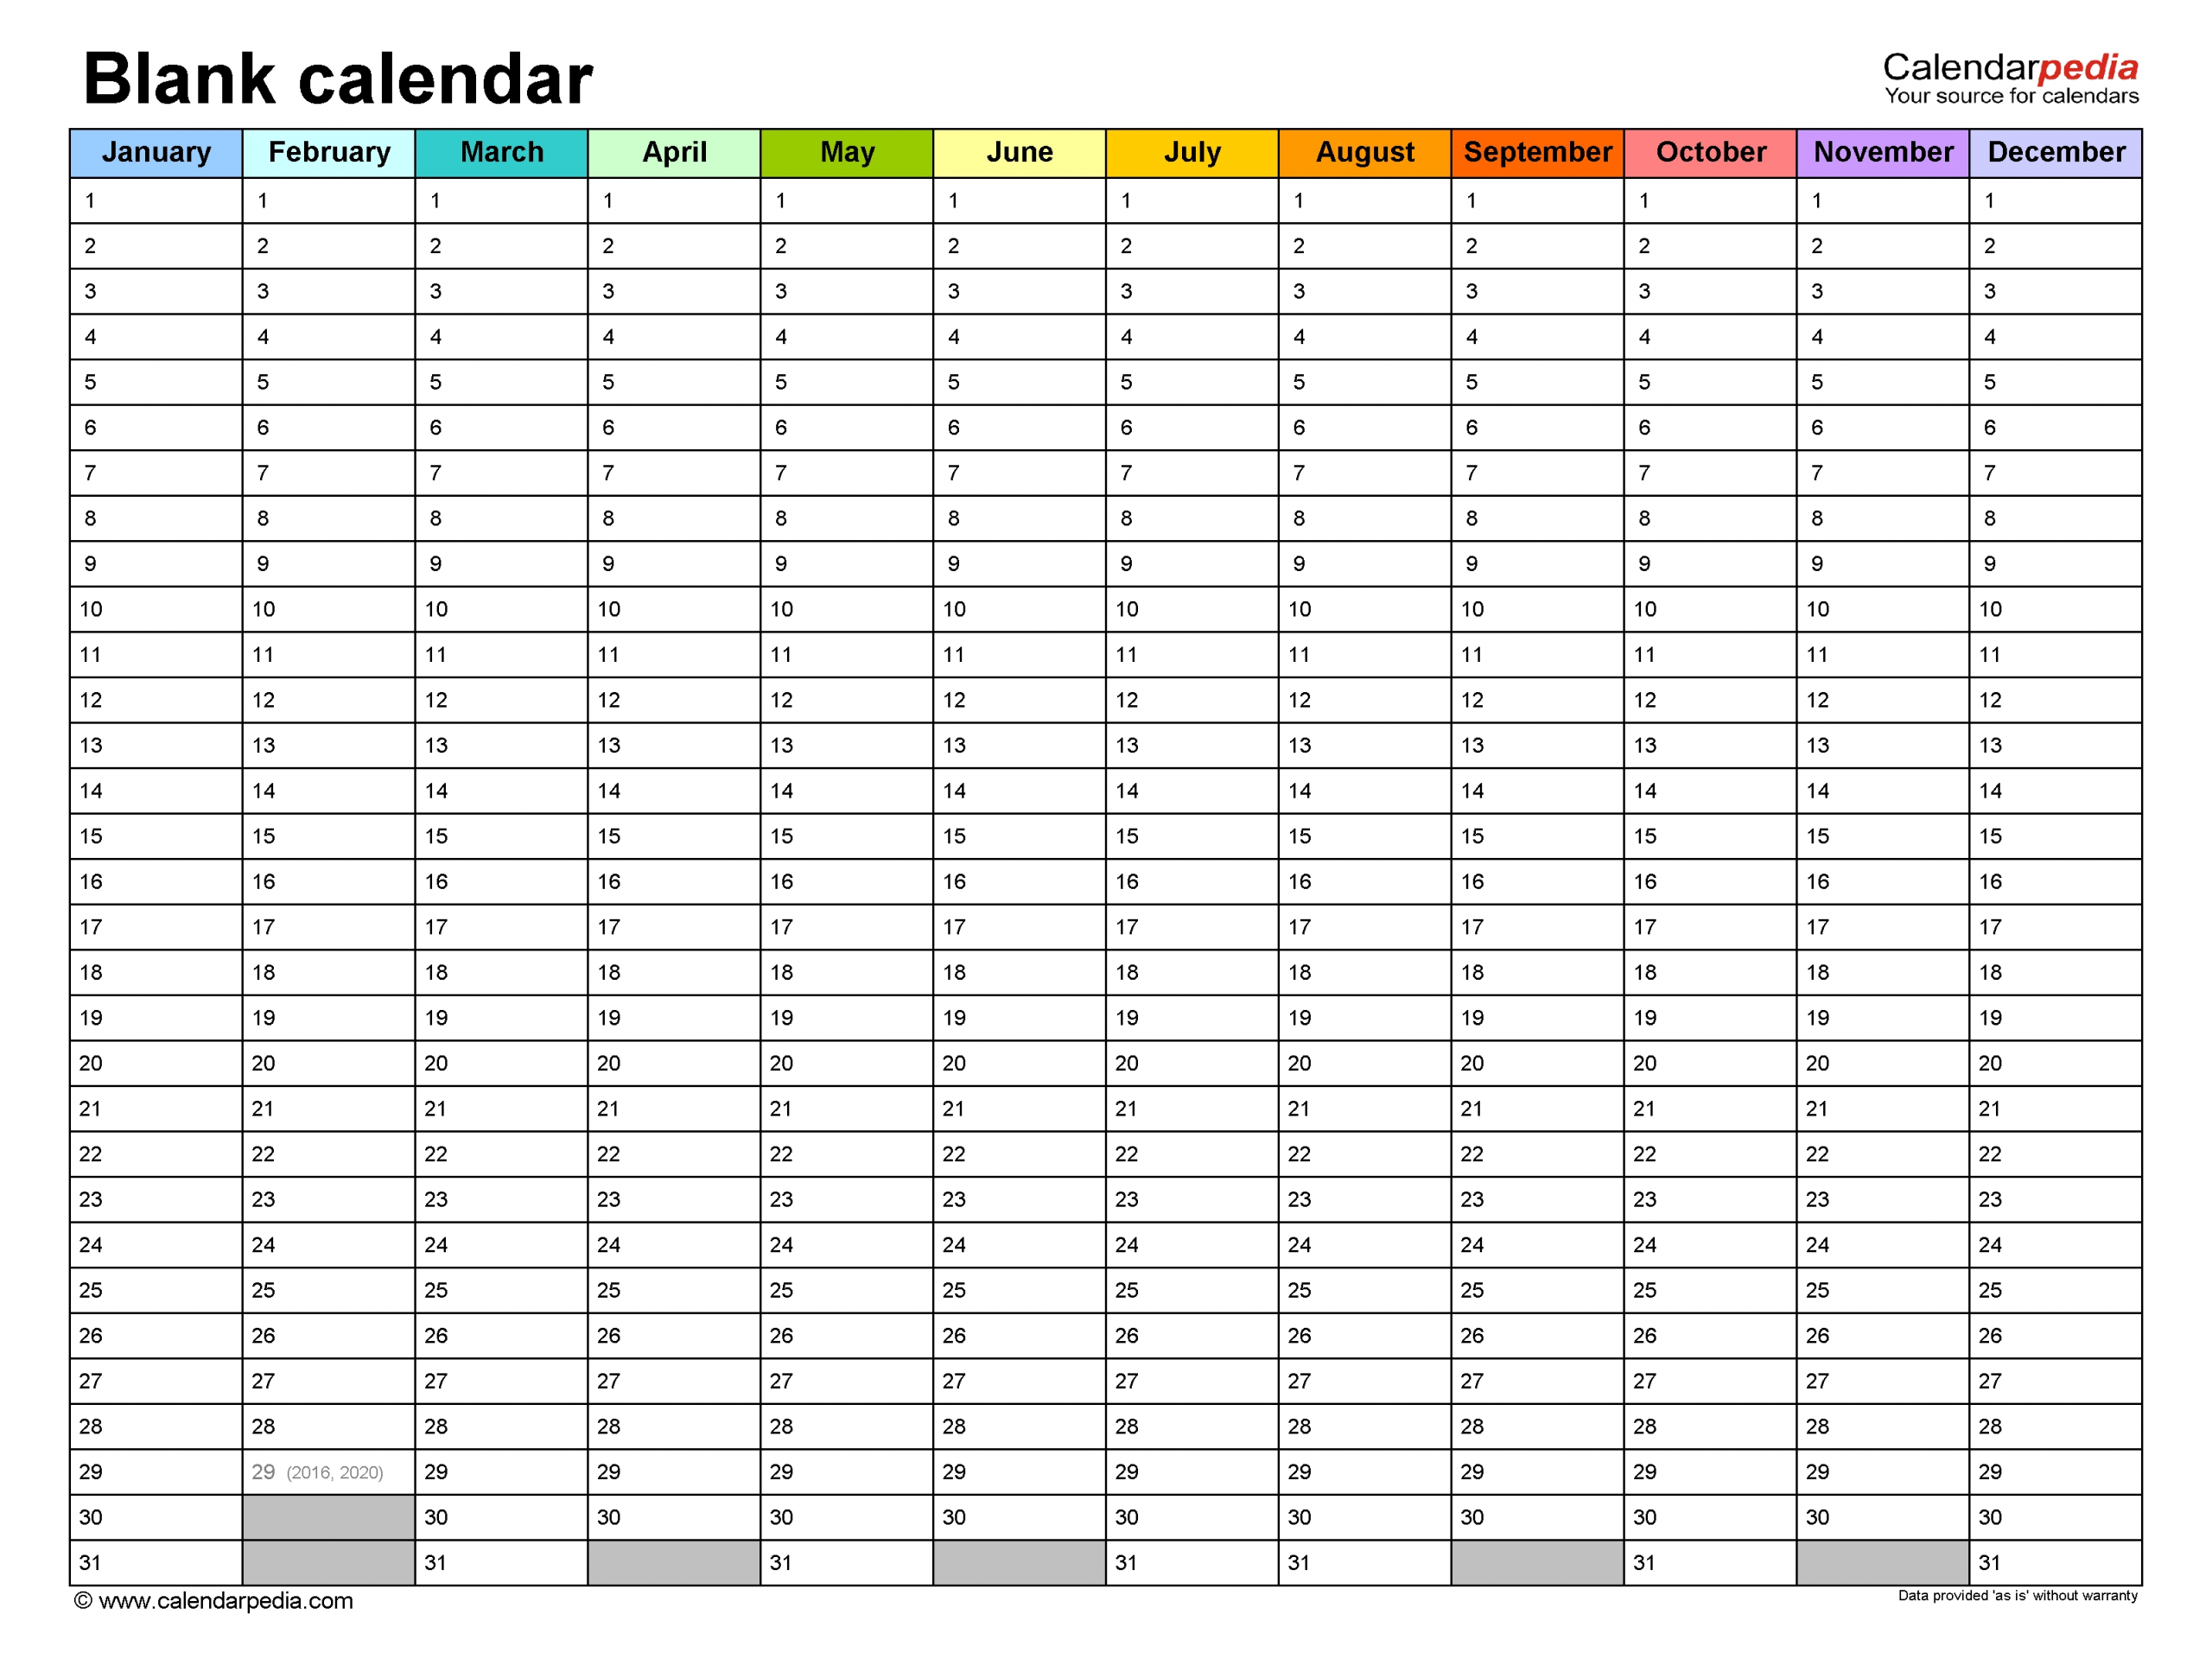 Blank Calendars - Free Printable Microsoft Word Templates Calendar Template One Page